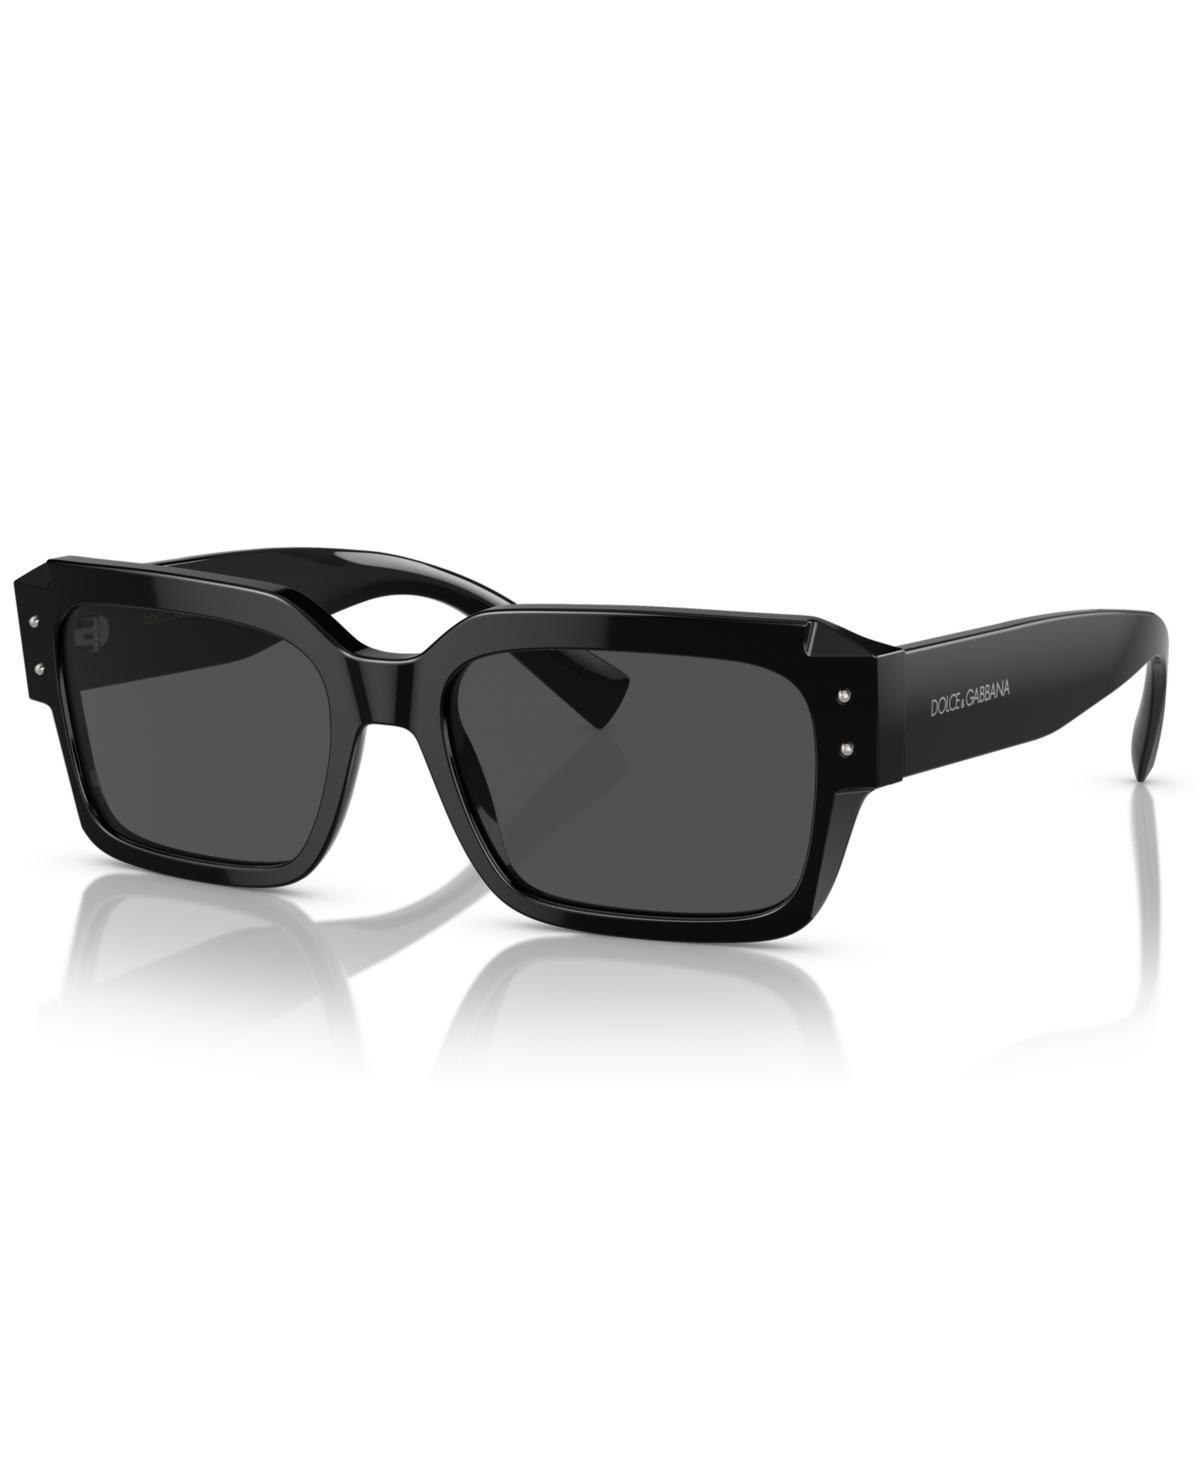 Dolce  Gabbana Mens DG4460 56mm Square Sunglasses Product Image